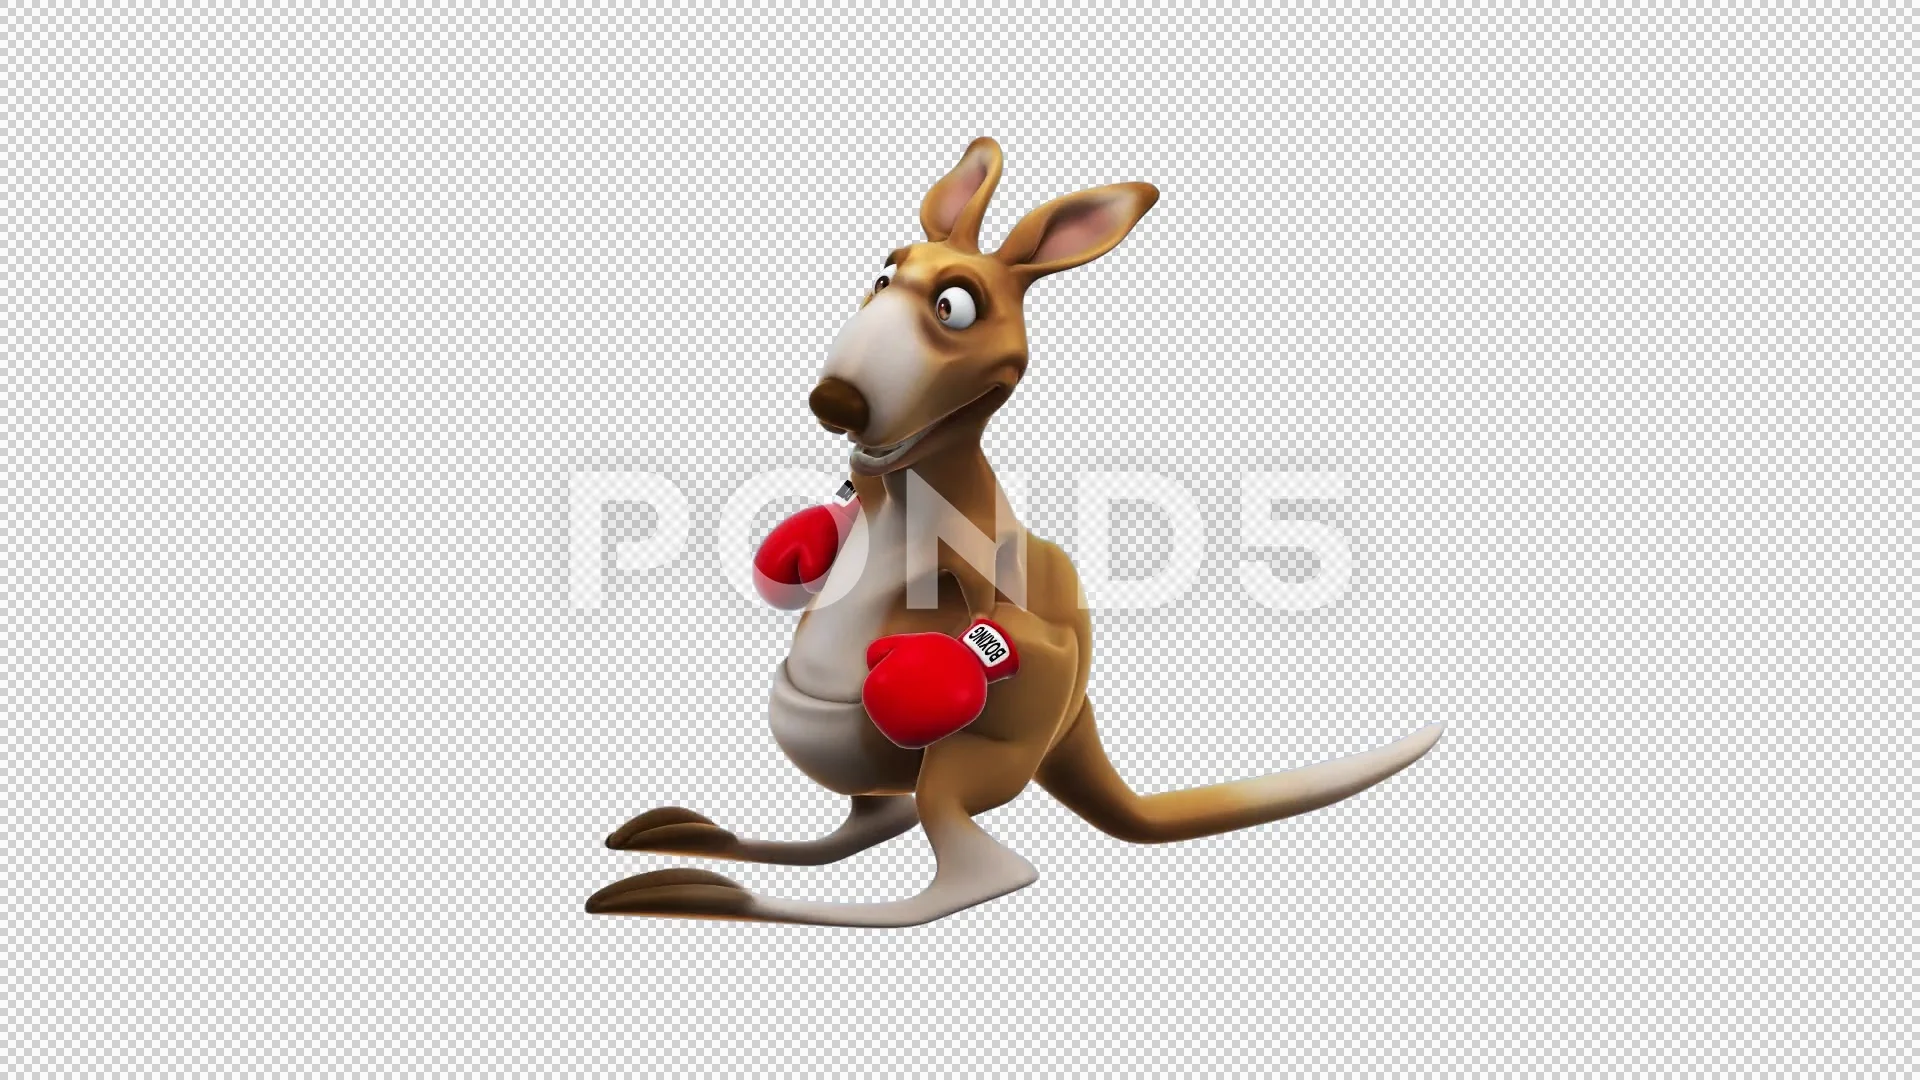 Kangaroo cartoon animal Royalty Free Vector Image